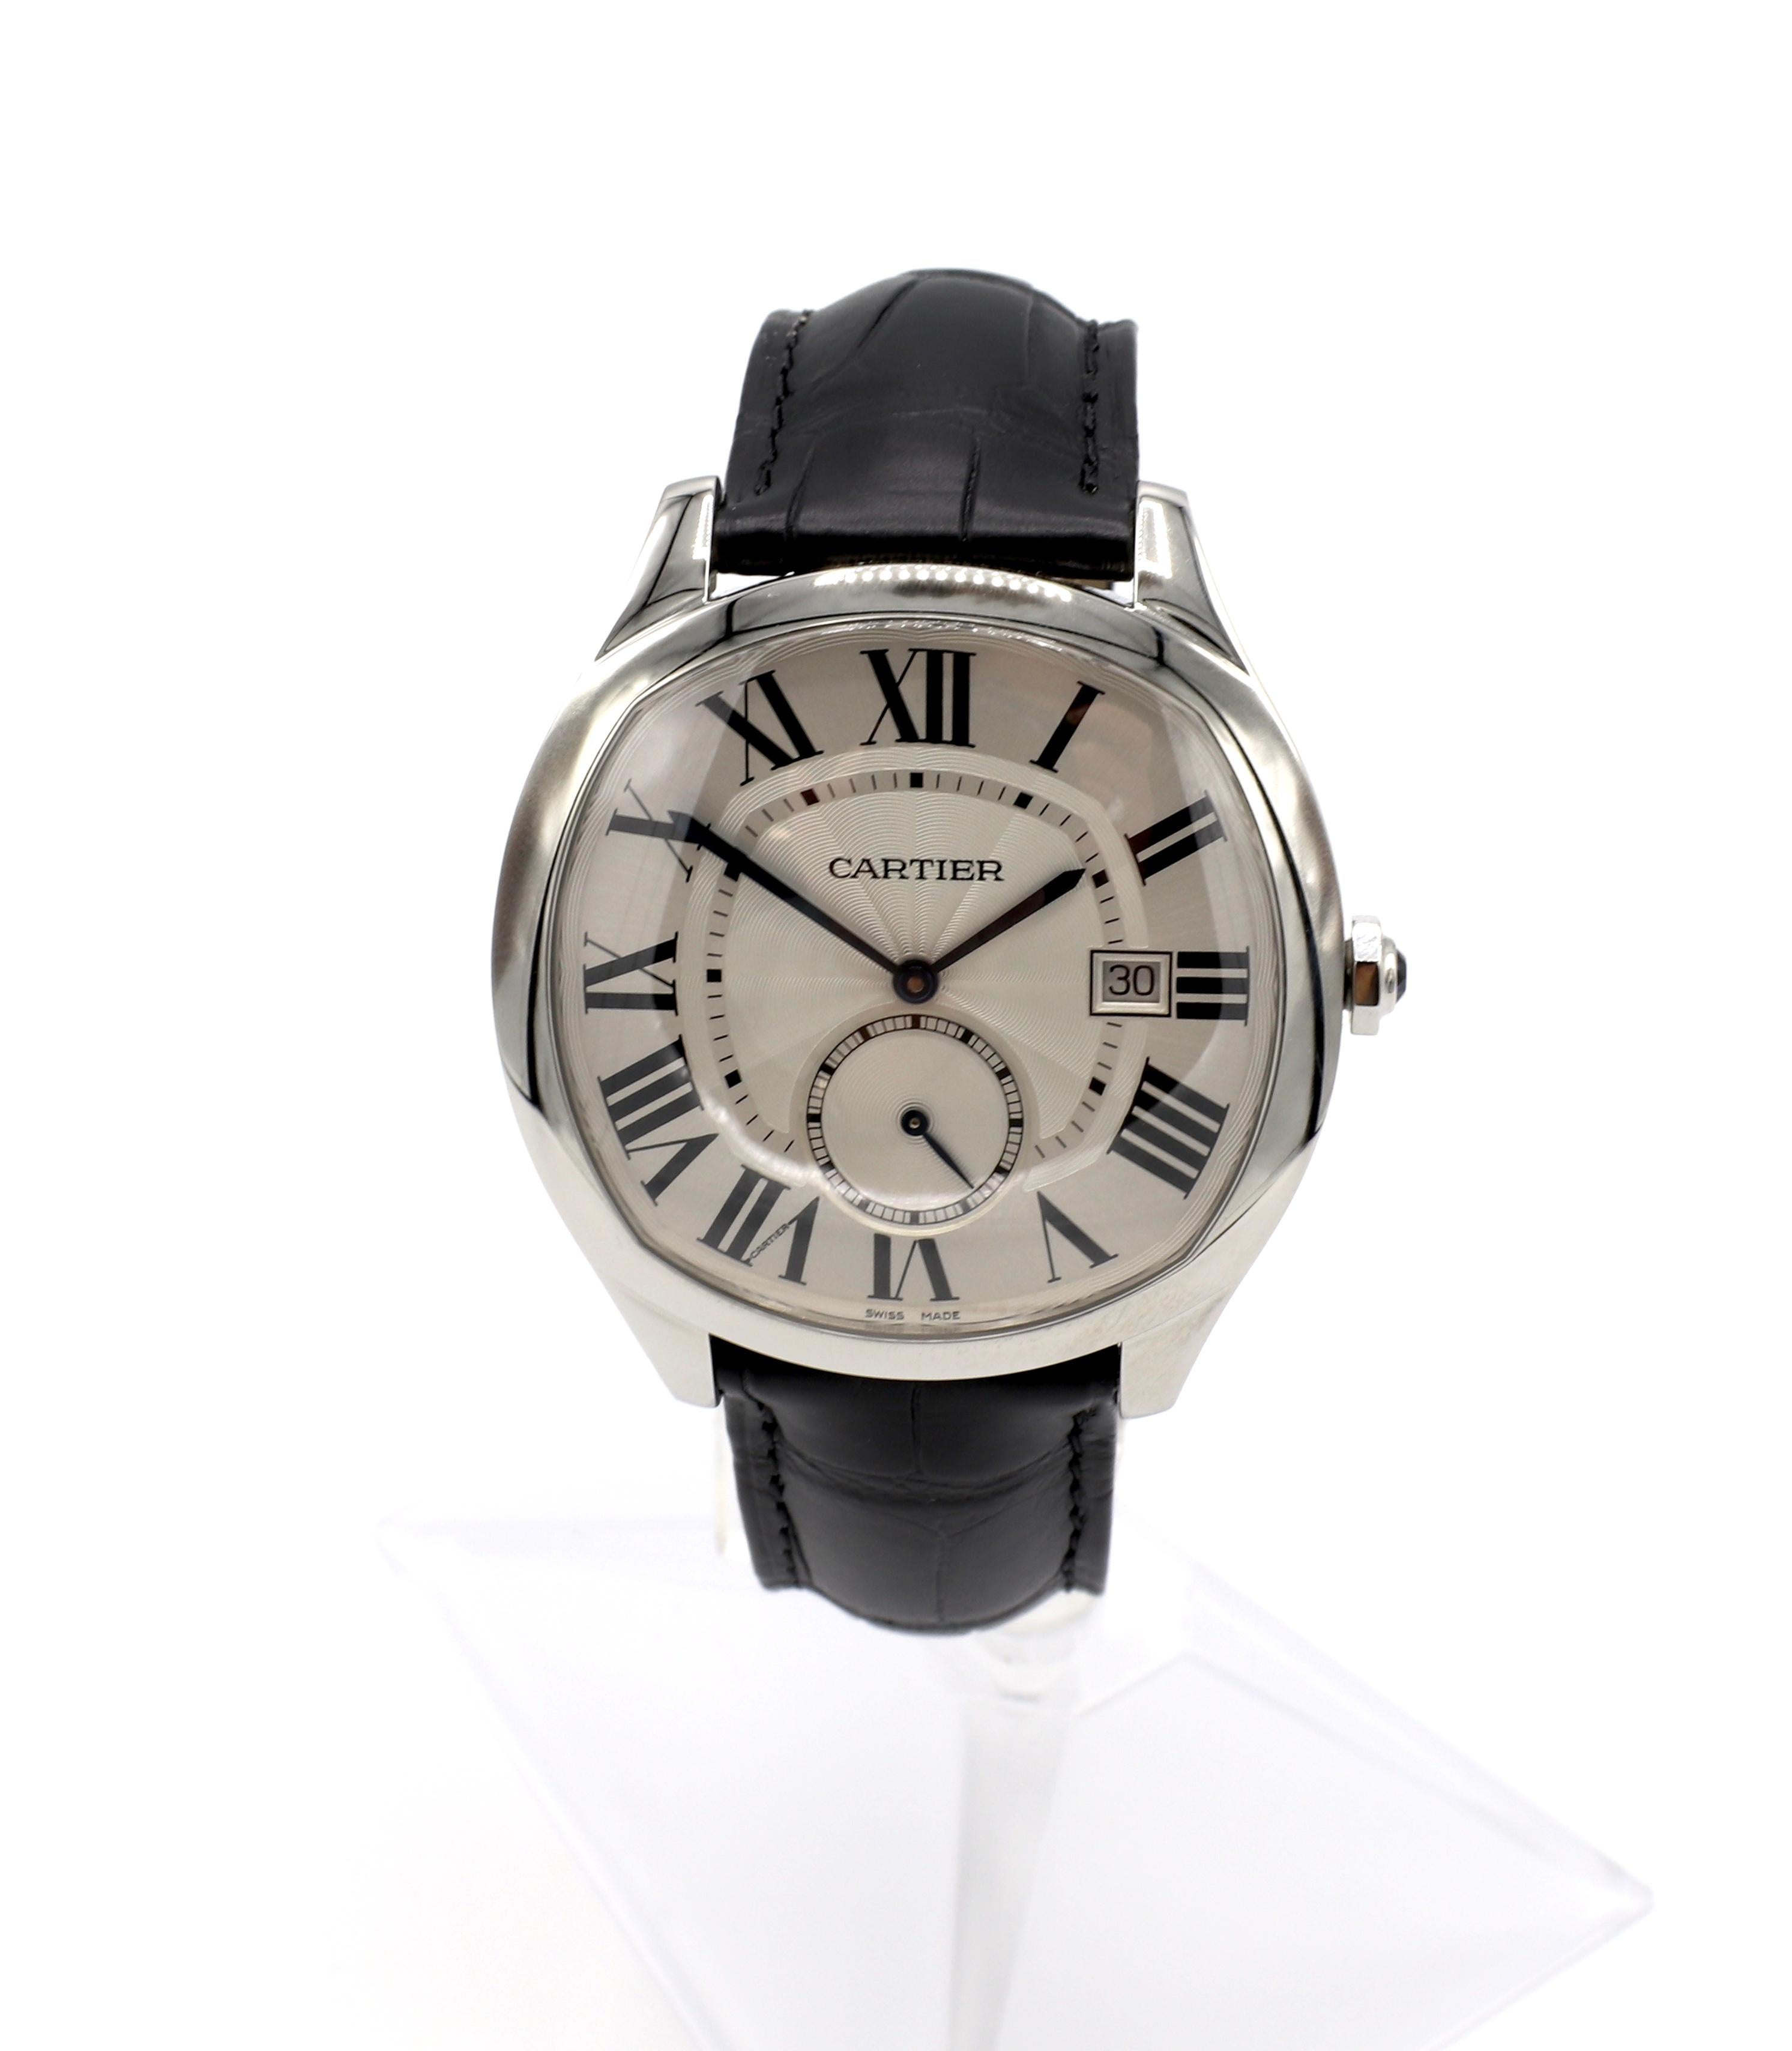 Cartier Drive De Cartier WSNM0004 Stainless Steel Leather Strap Men's Watch 6